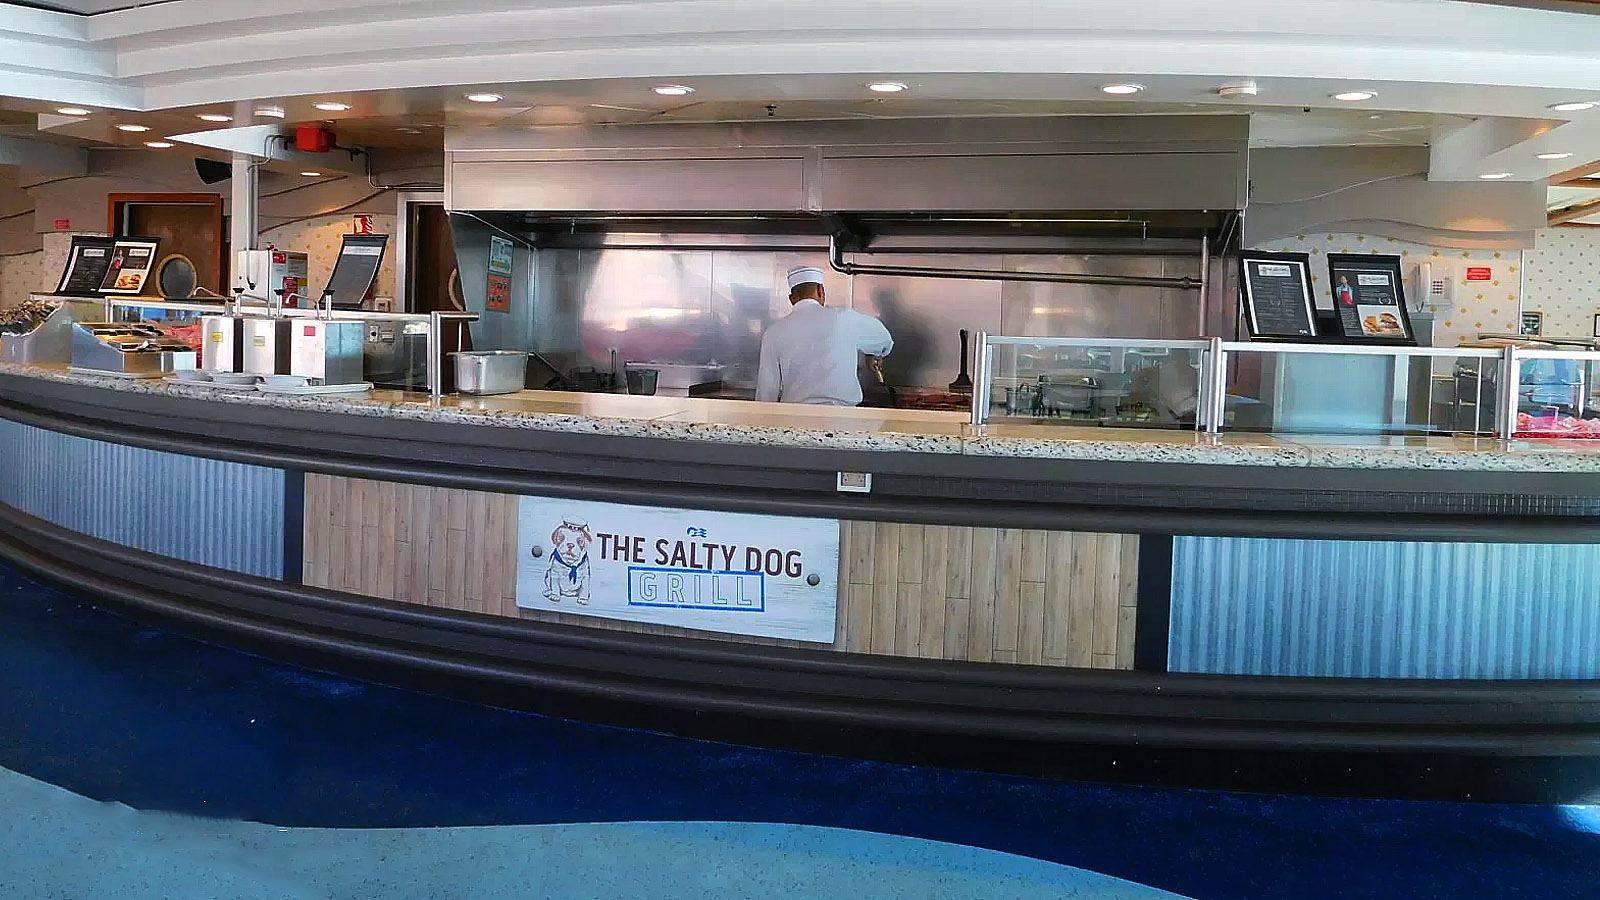 The Salty Dog Grill on the Princess Cruises Grand Princess